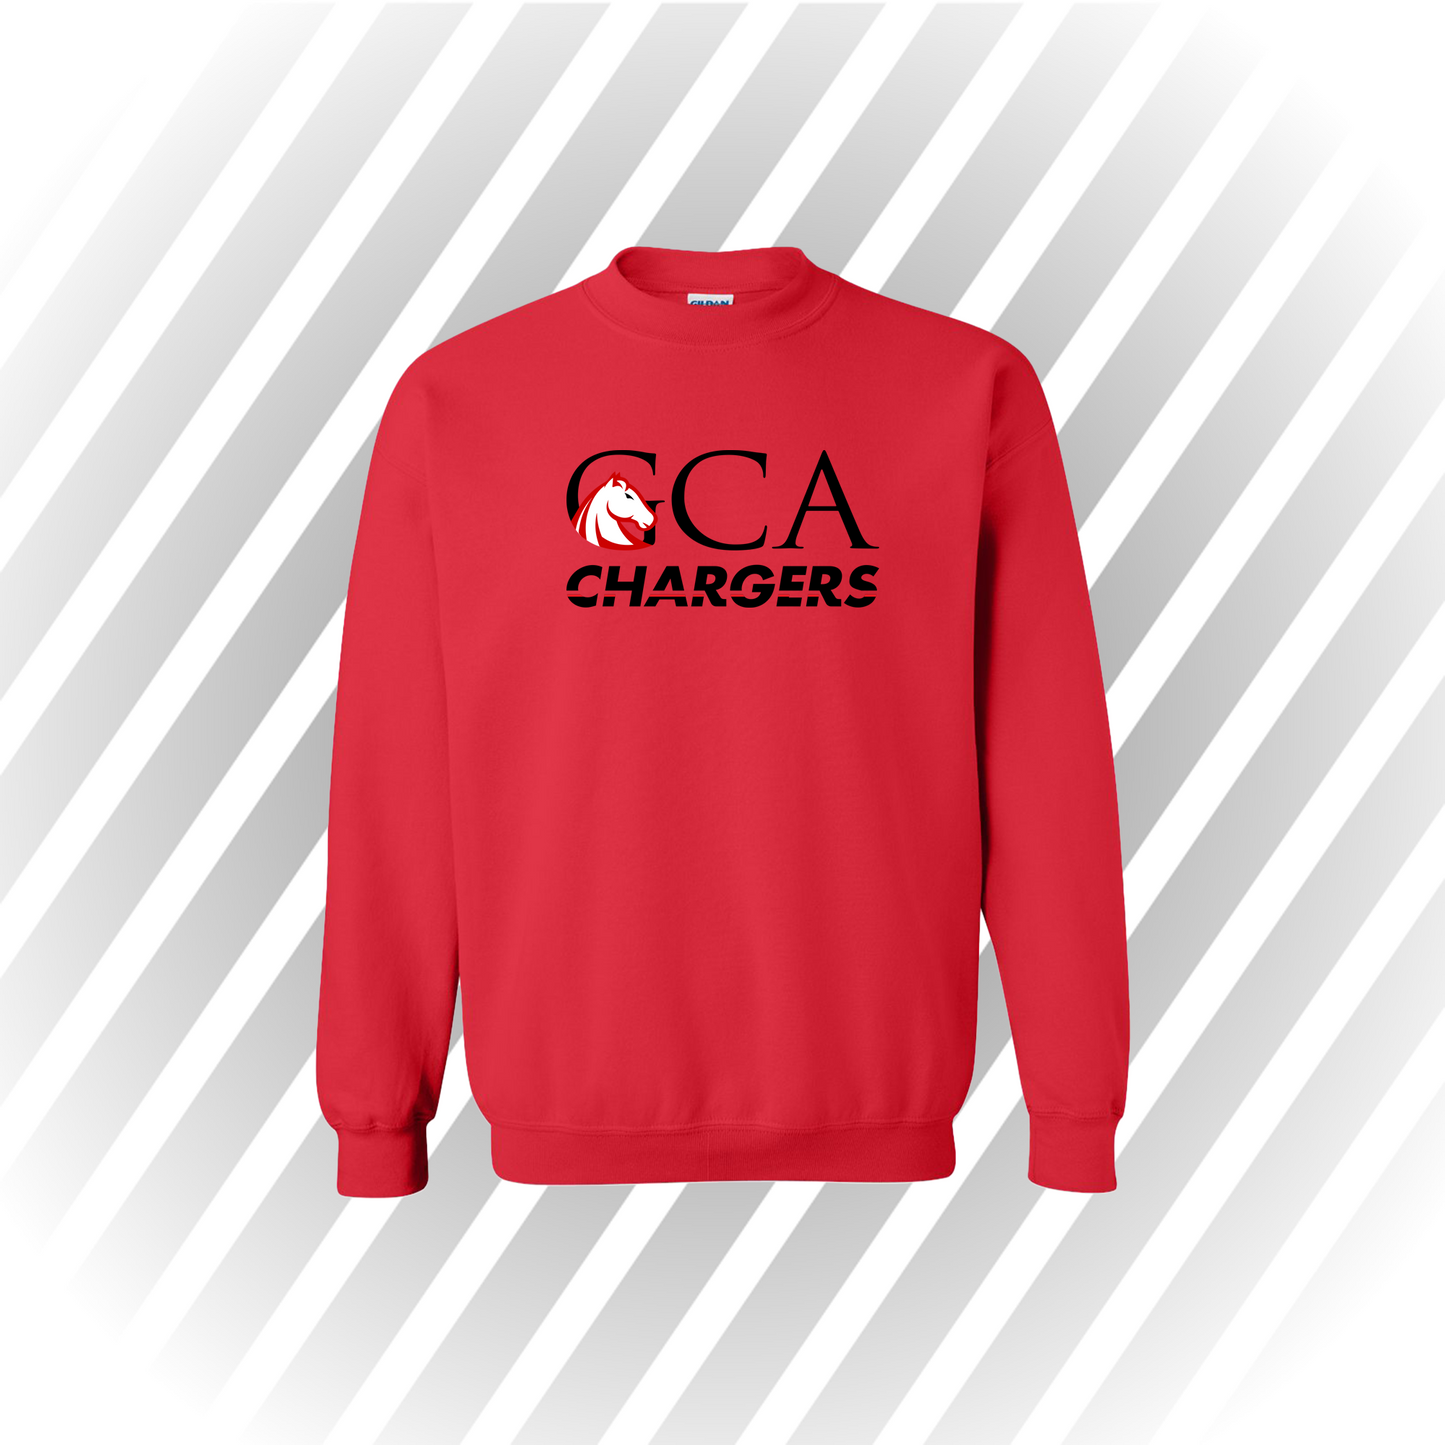 GCA Chargers - Crewneck Sweater